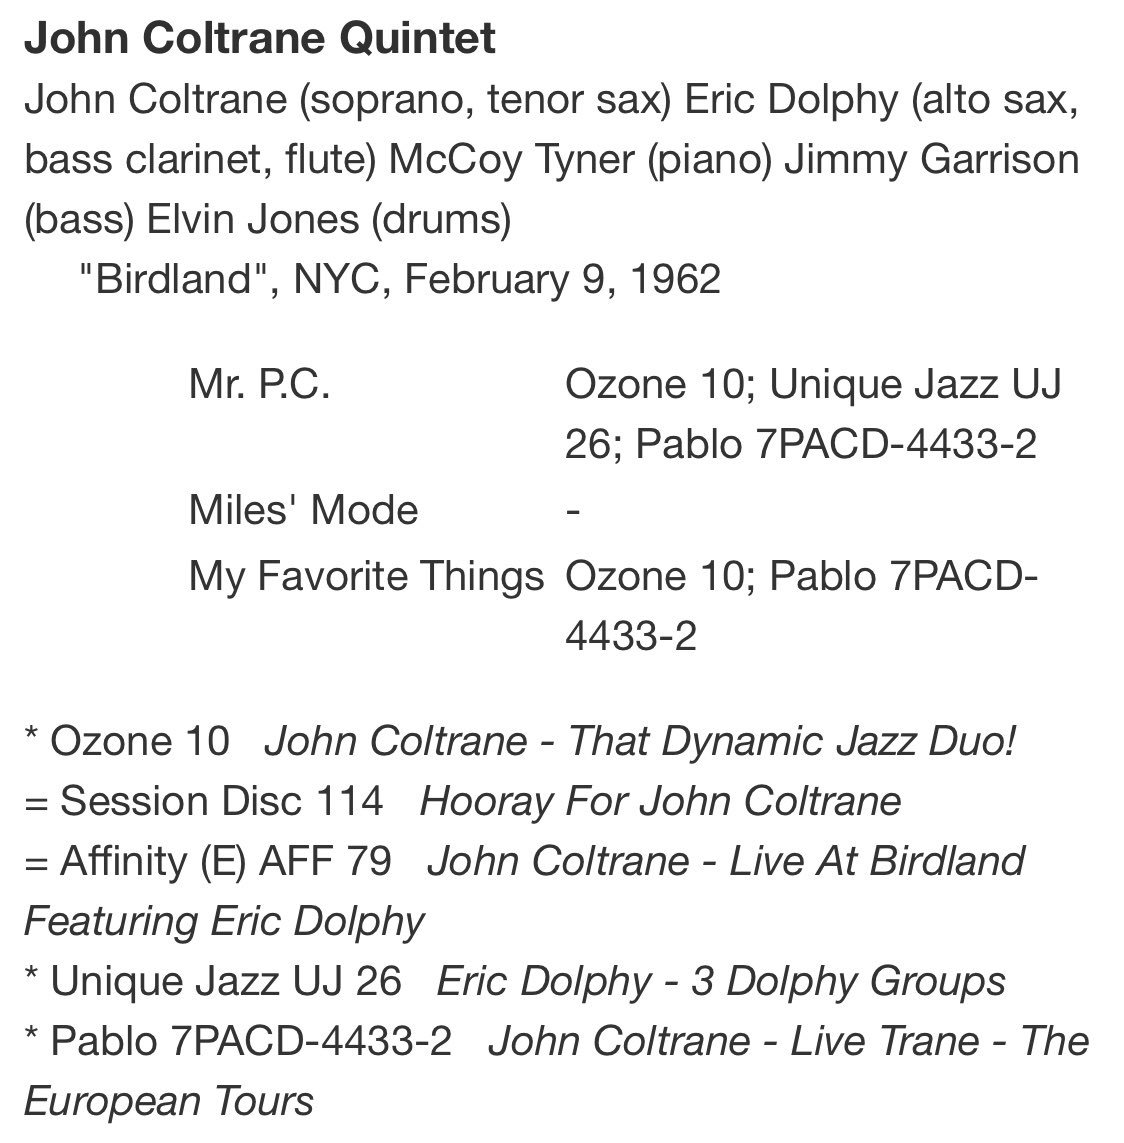 S Murakami That Dynamic Jazz Duo Rare Broadcast Performances John Coltrane Eric Dolphy Label Ozone 10 Birdland Nyc February 9 1962 Johncoltrane Mr P C T Co Rqfhq3z94c Miles Mode T Co Ennovi3s3a